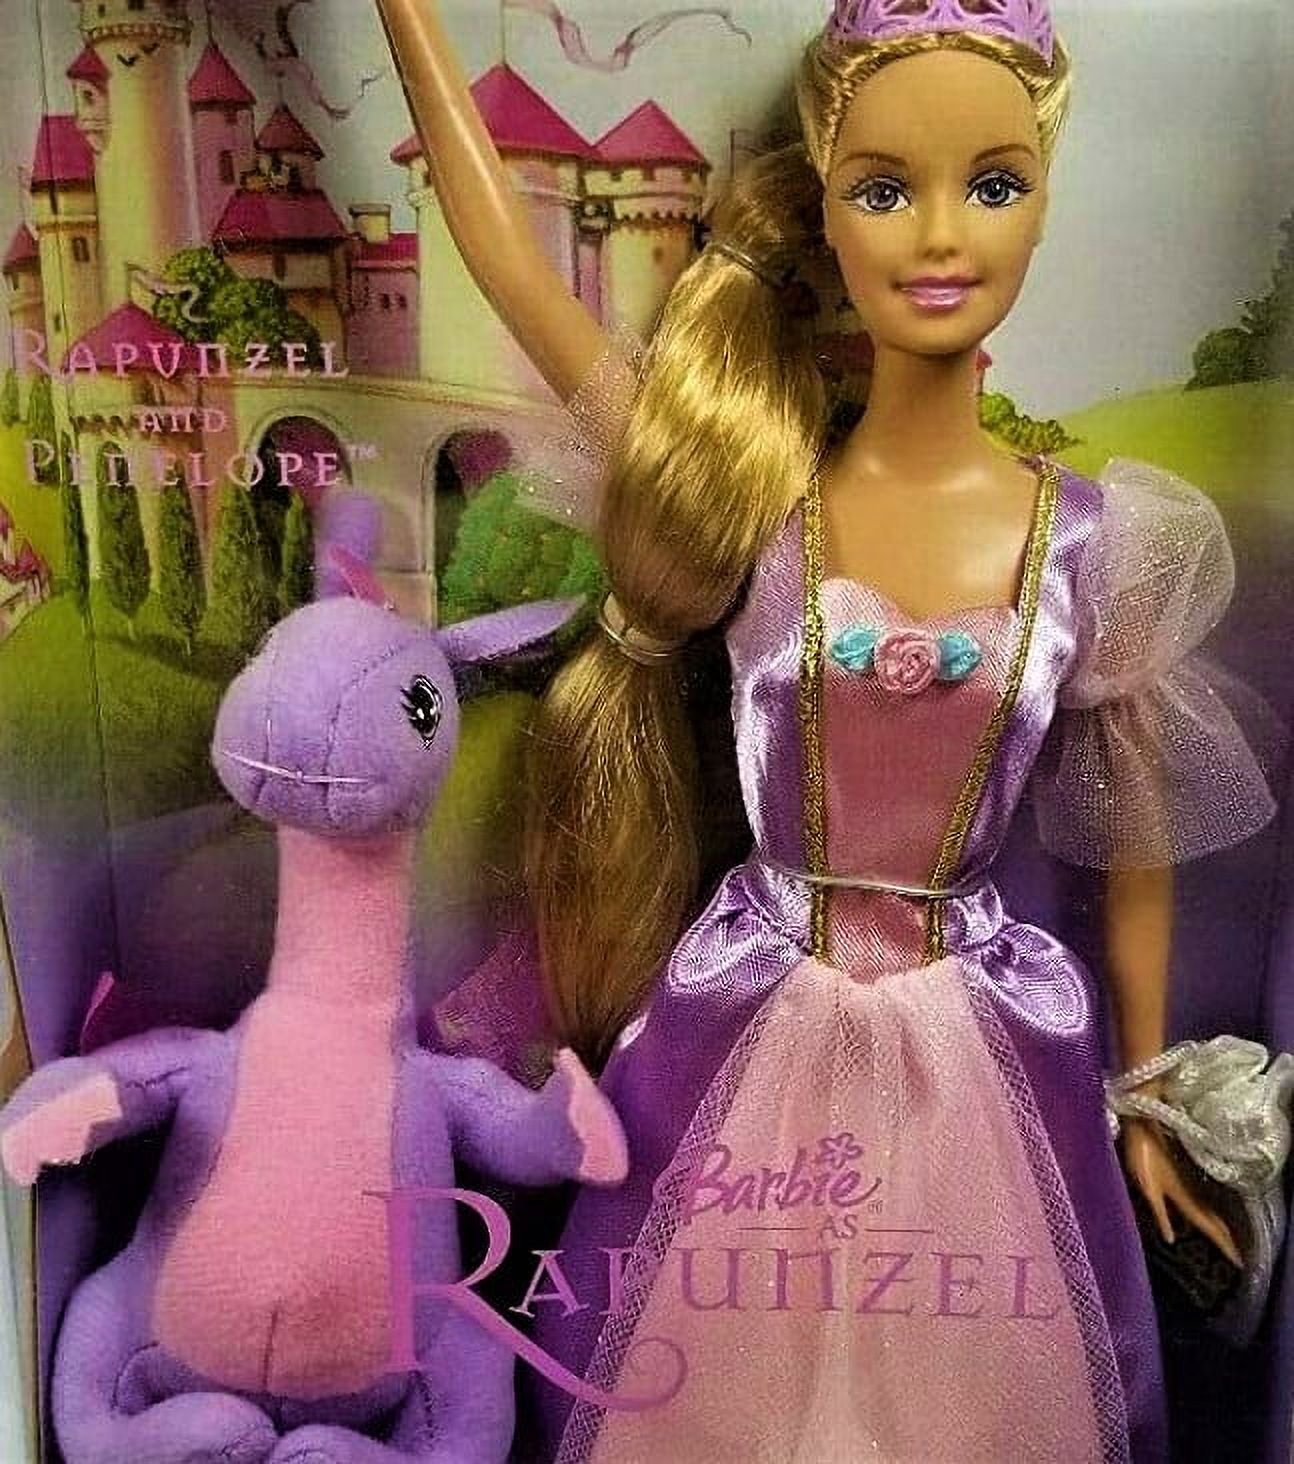 Barbie as Rapunzel - 5